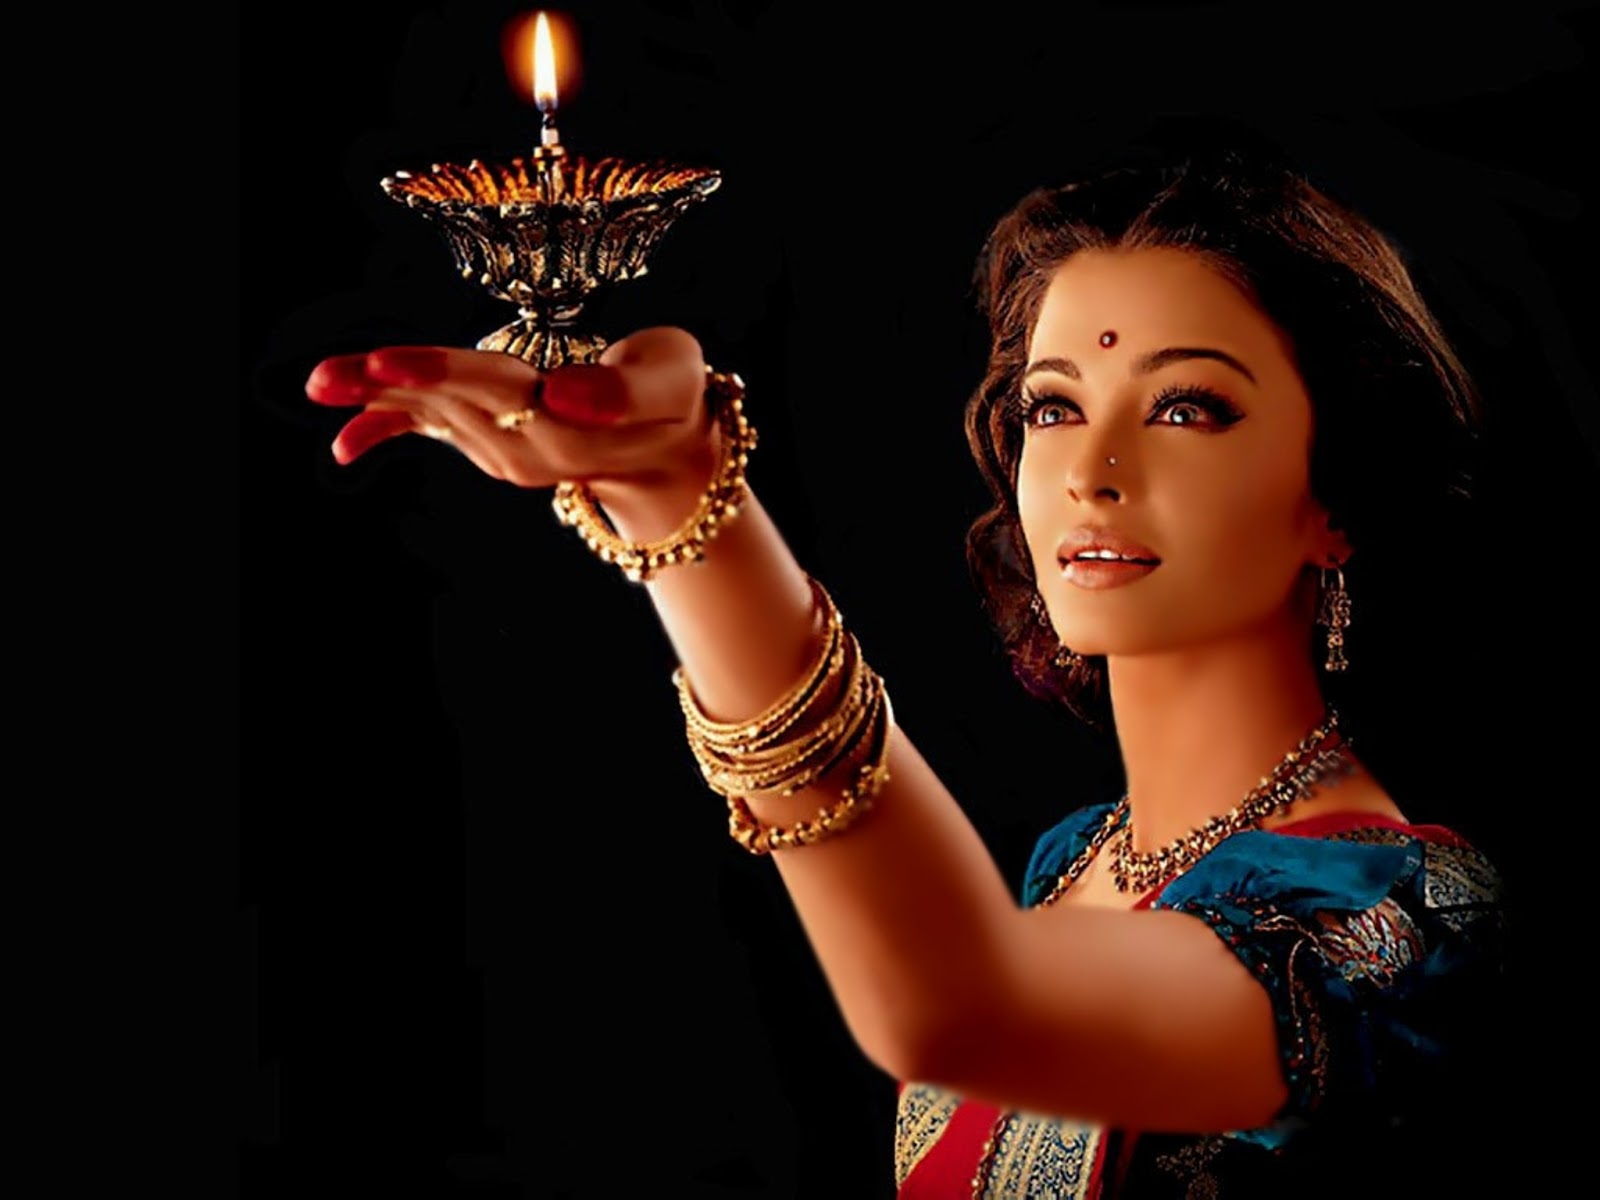 bollywood, aishwarya rai, celebrity Image for desktop